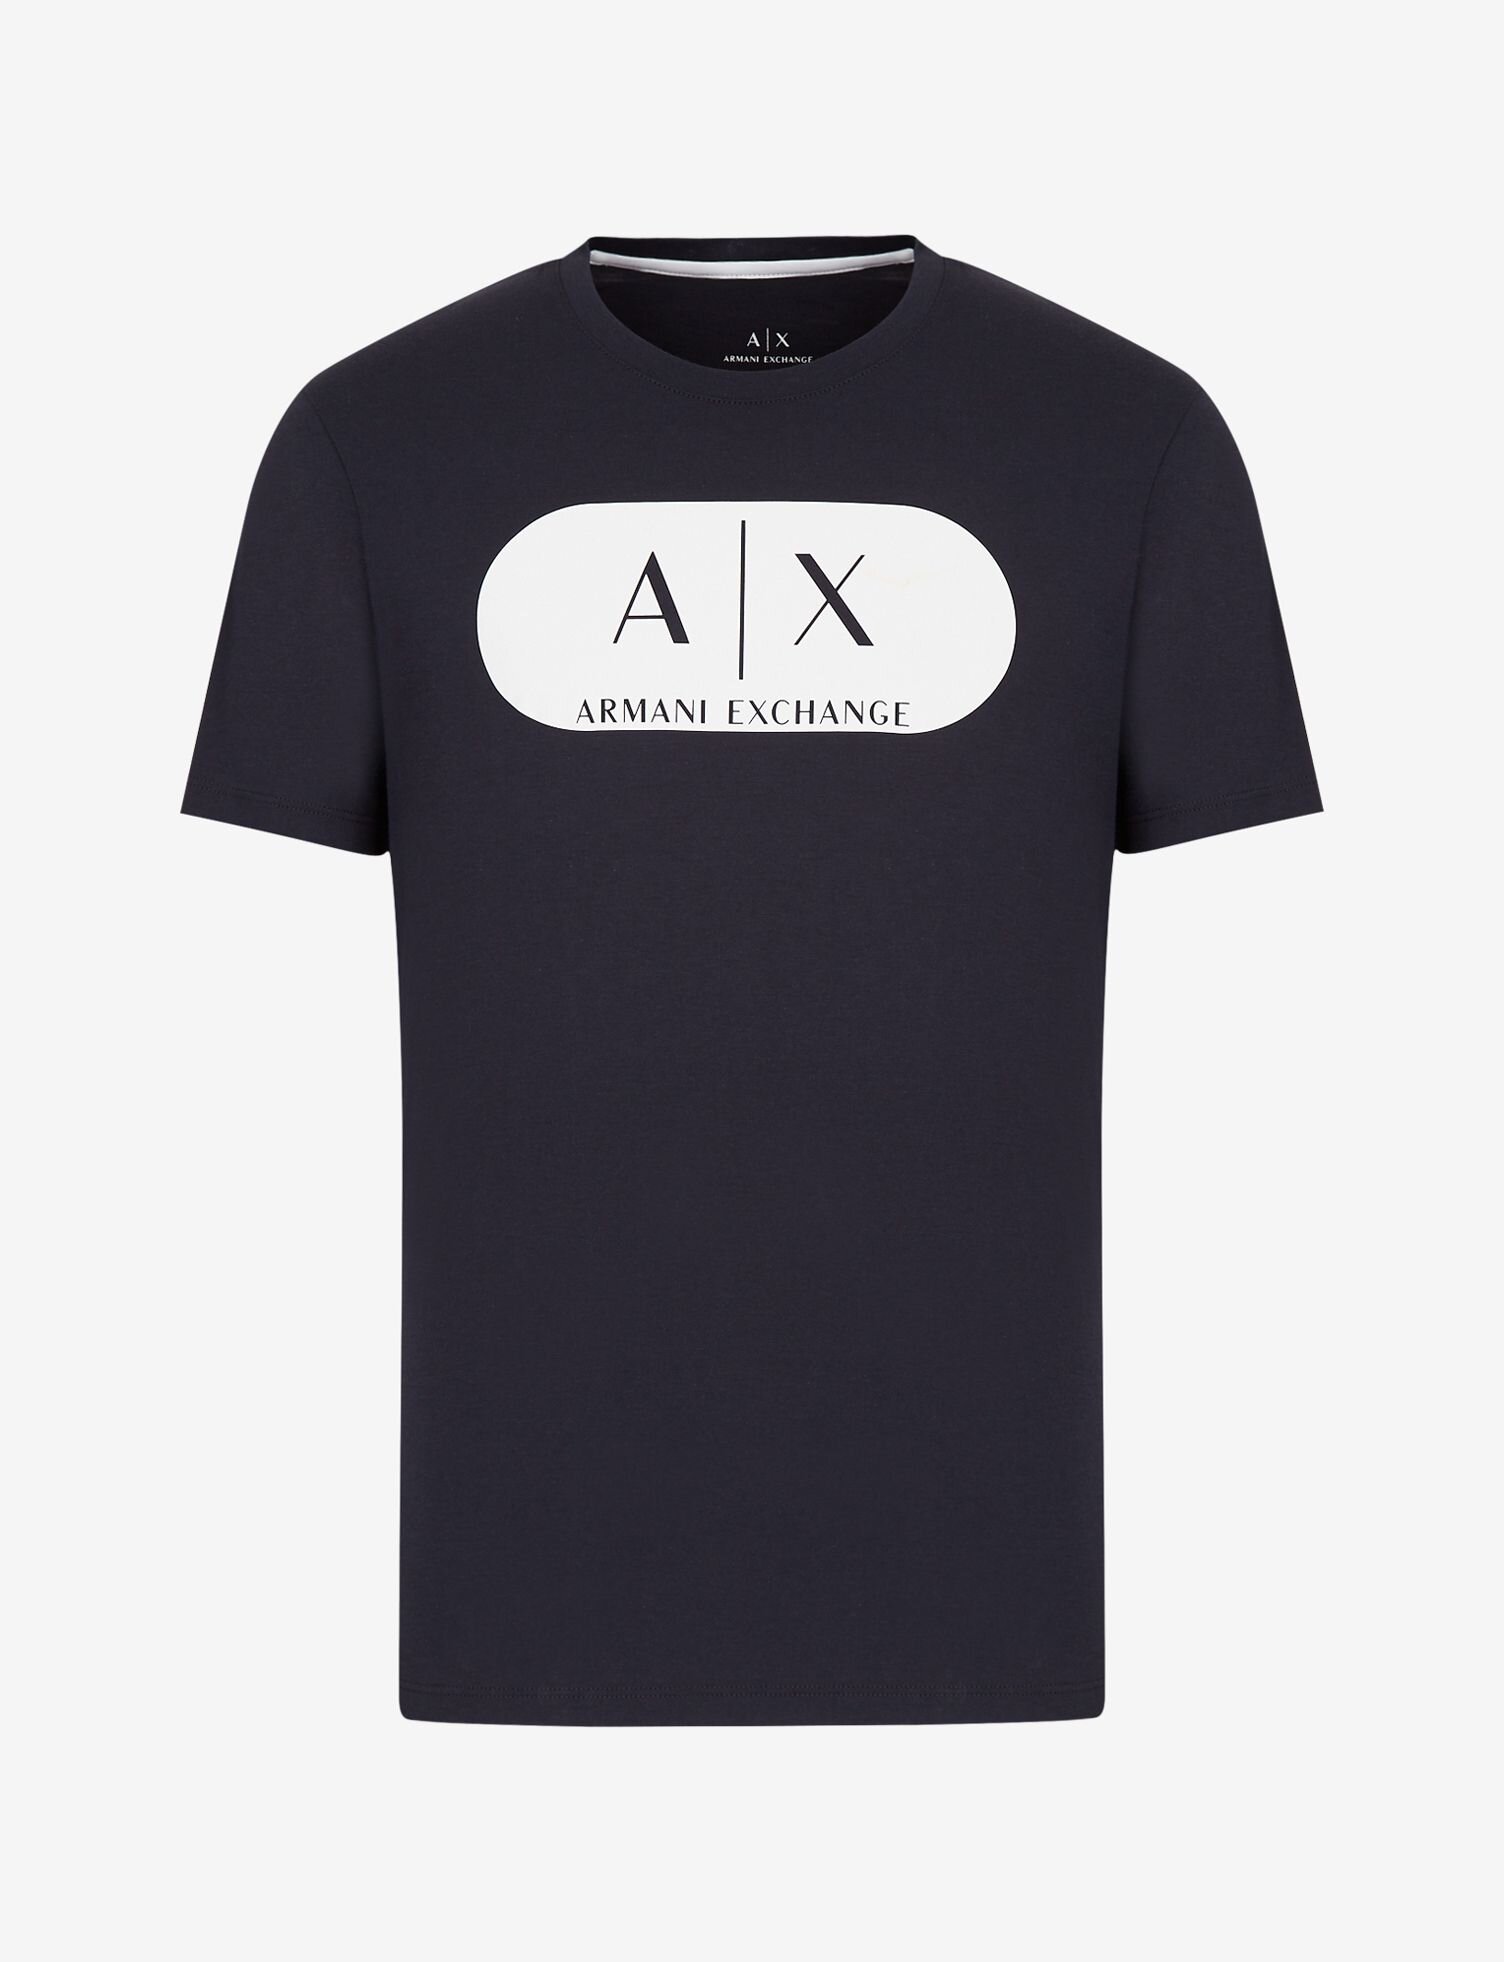 Armani Exchange_Slim Fit T-Shirt_P4,550_P2,730 02.jpeg